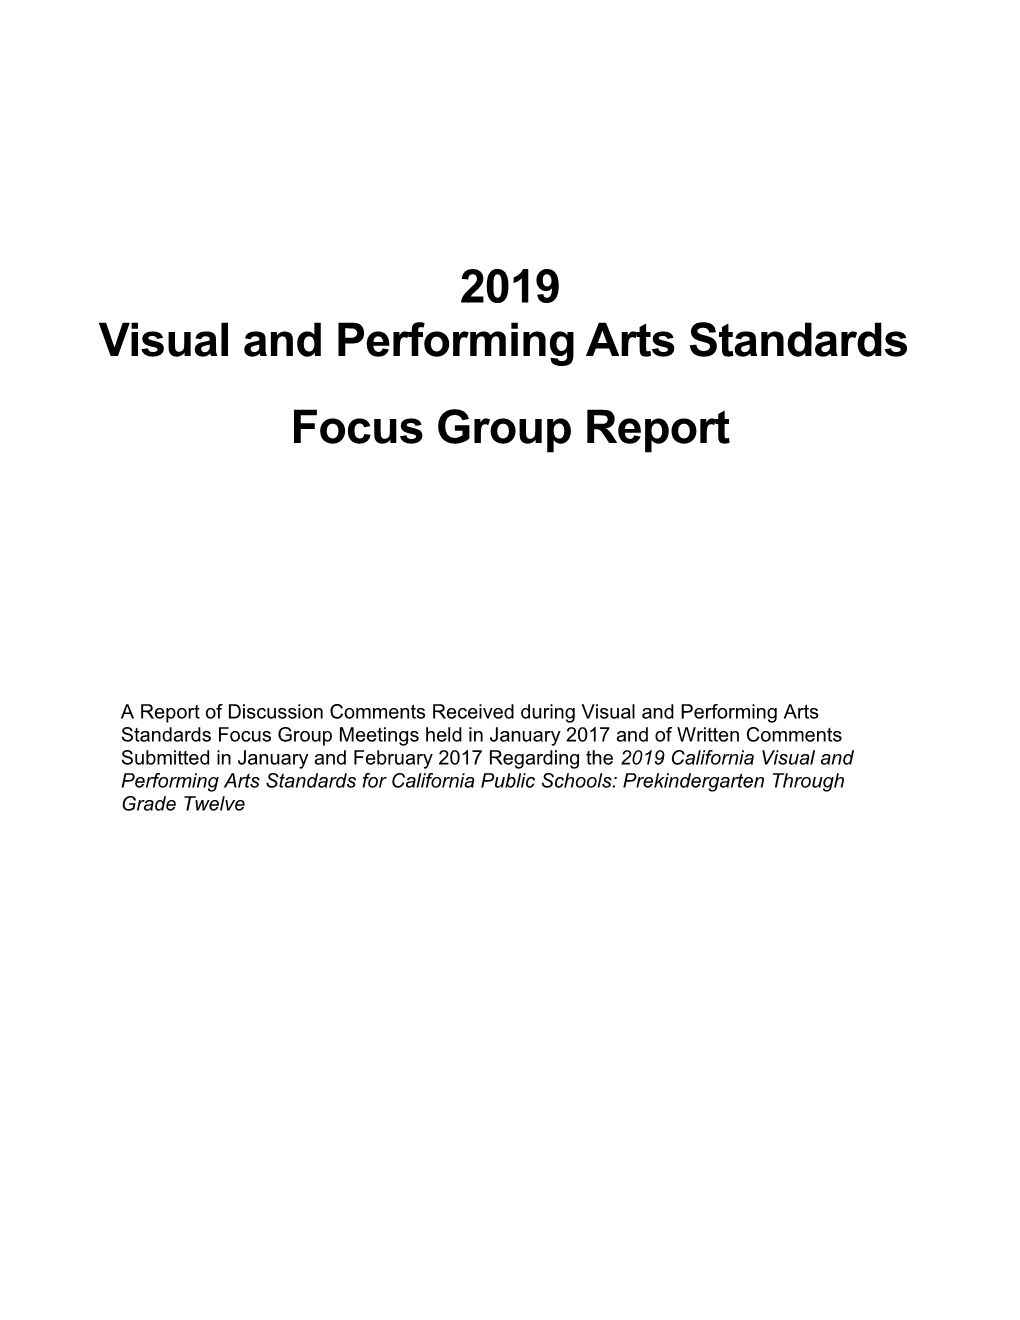 2019 VAPA Focus Group Report - Instructional Quality Commission (CA Dept Of Education)